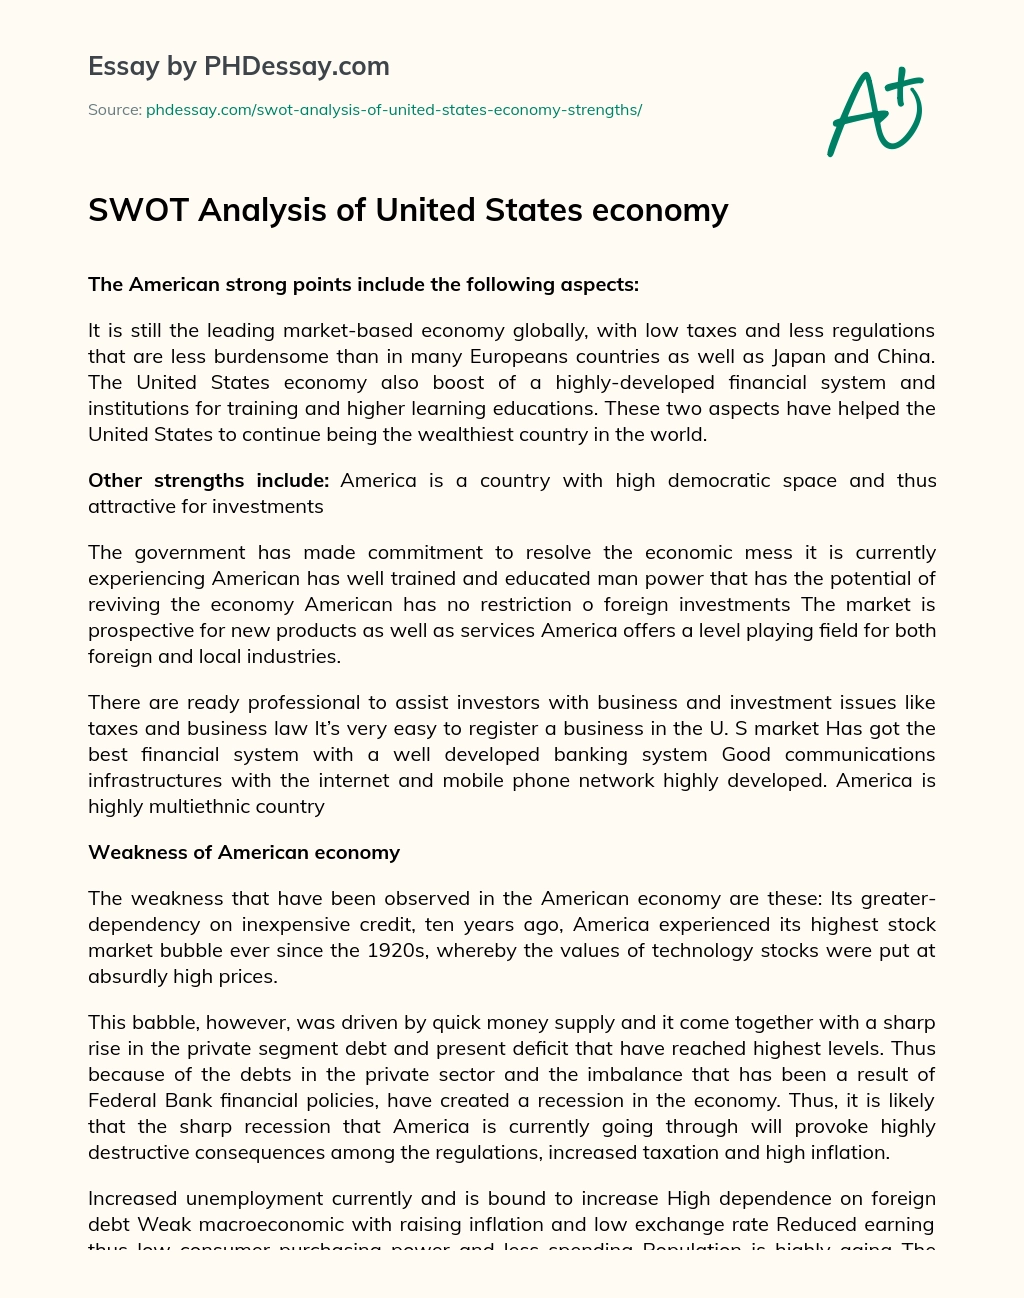 SWOT Analysis of United States economy essay